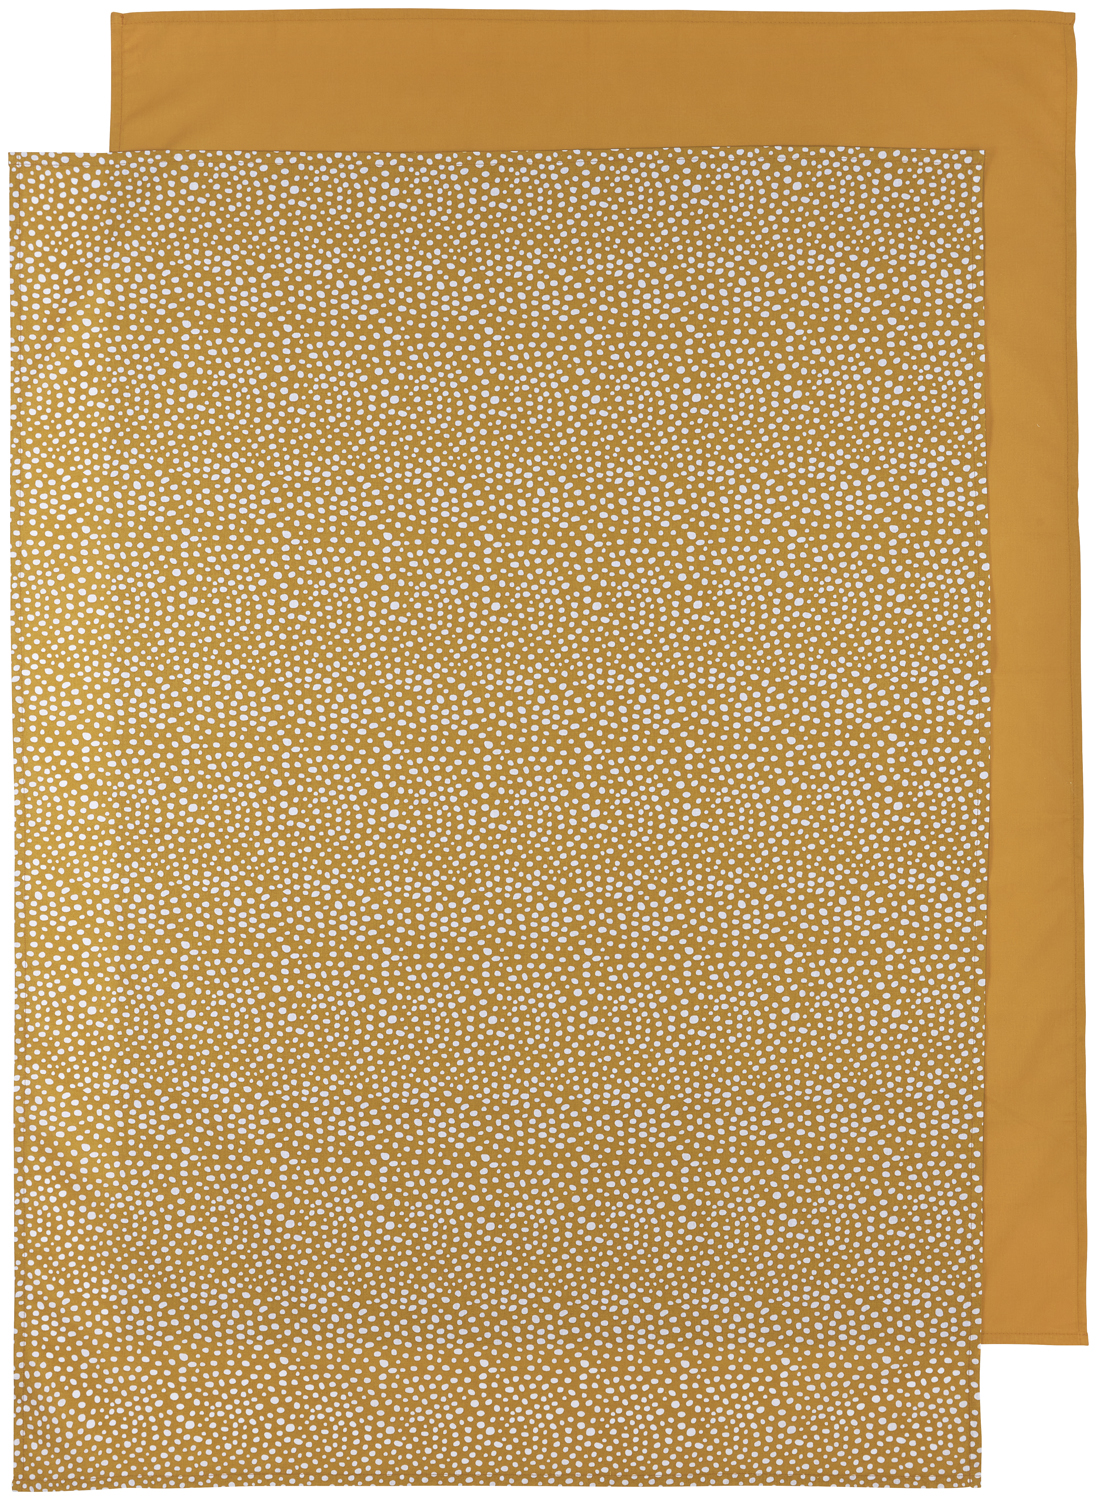 Ledikant laken 2-pack Cheetah/Uni - honey gold - 100x150cm